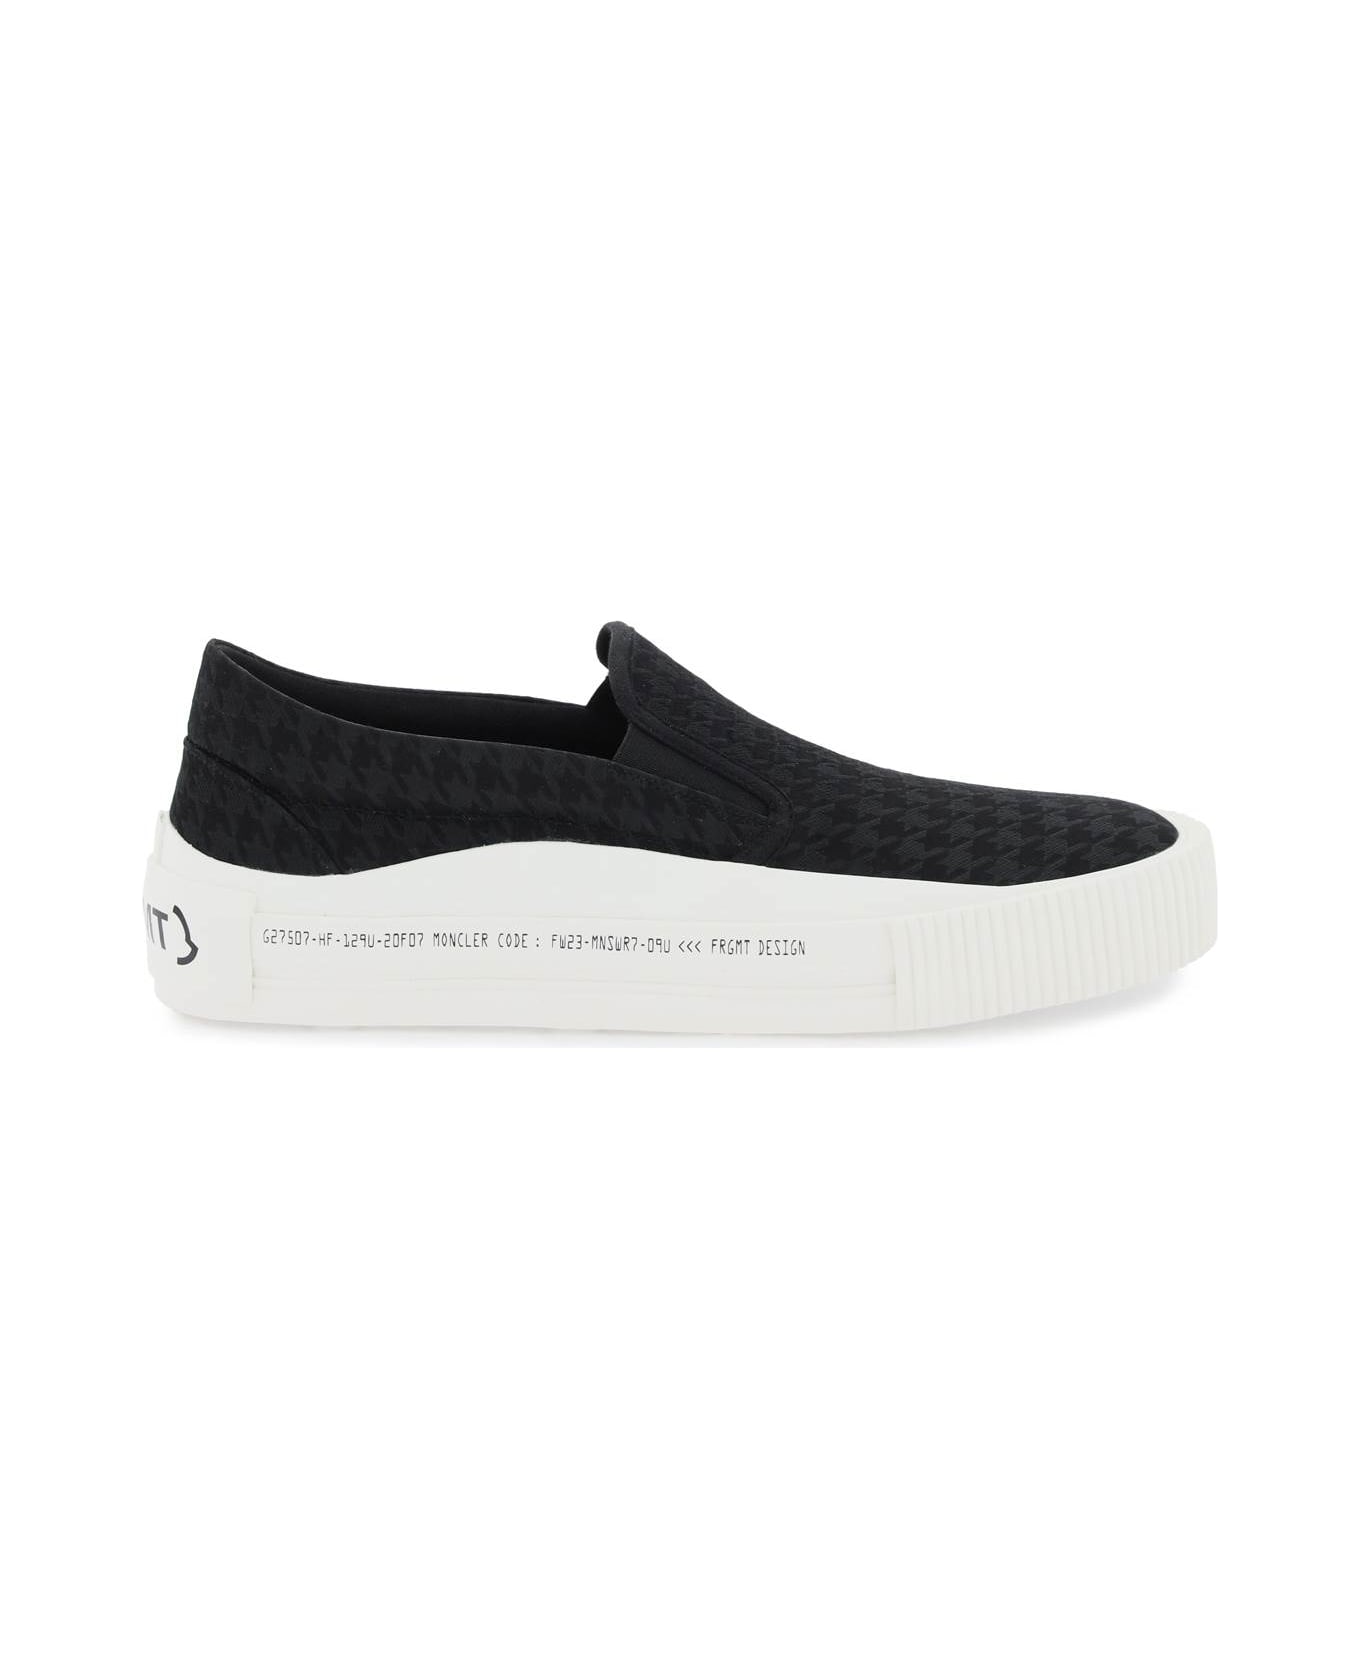 Moncler Genius Moncler X Frgmt - Vulcan Slip-on Sneakers - Black